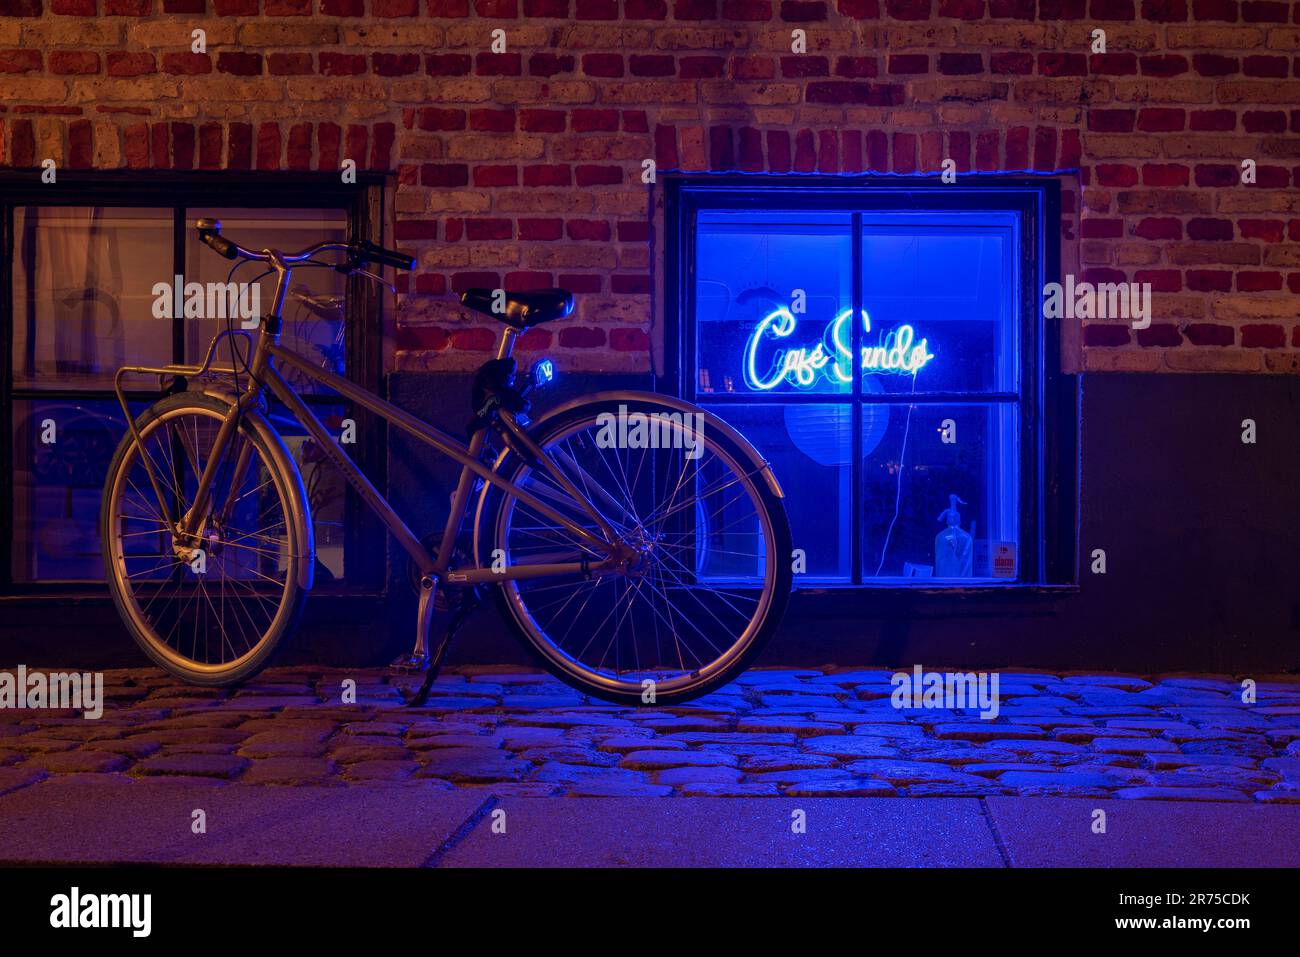 Bicycle, window, neon sign for cafe, Copenhagen, Denmark Stock Photo